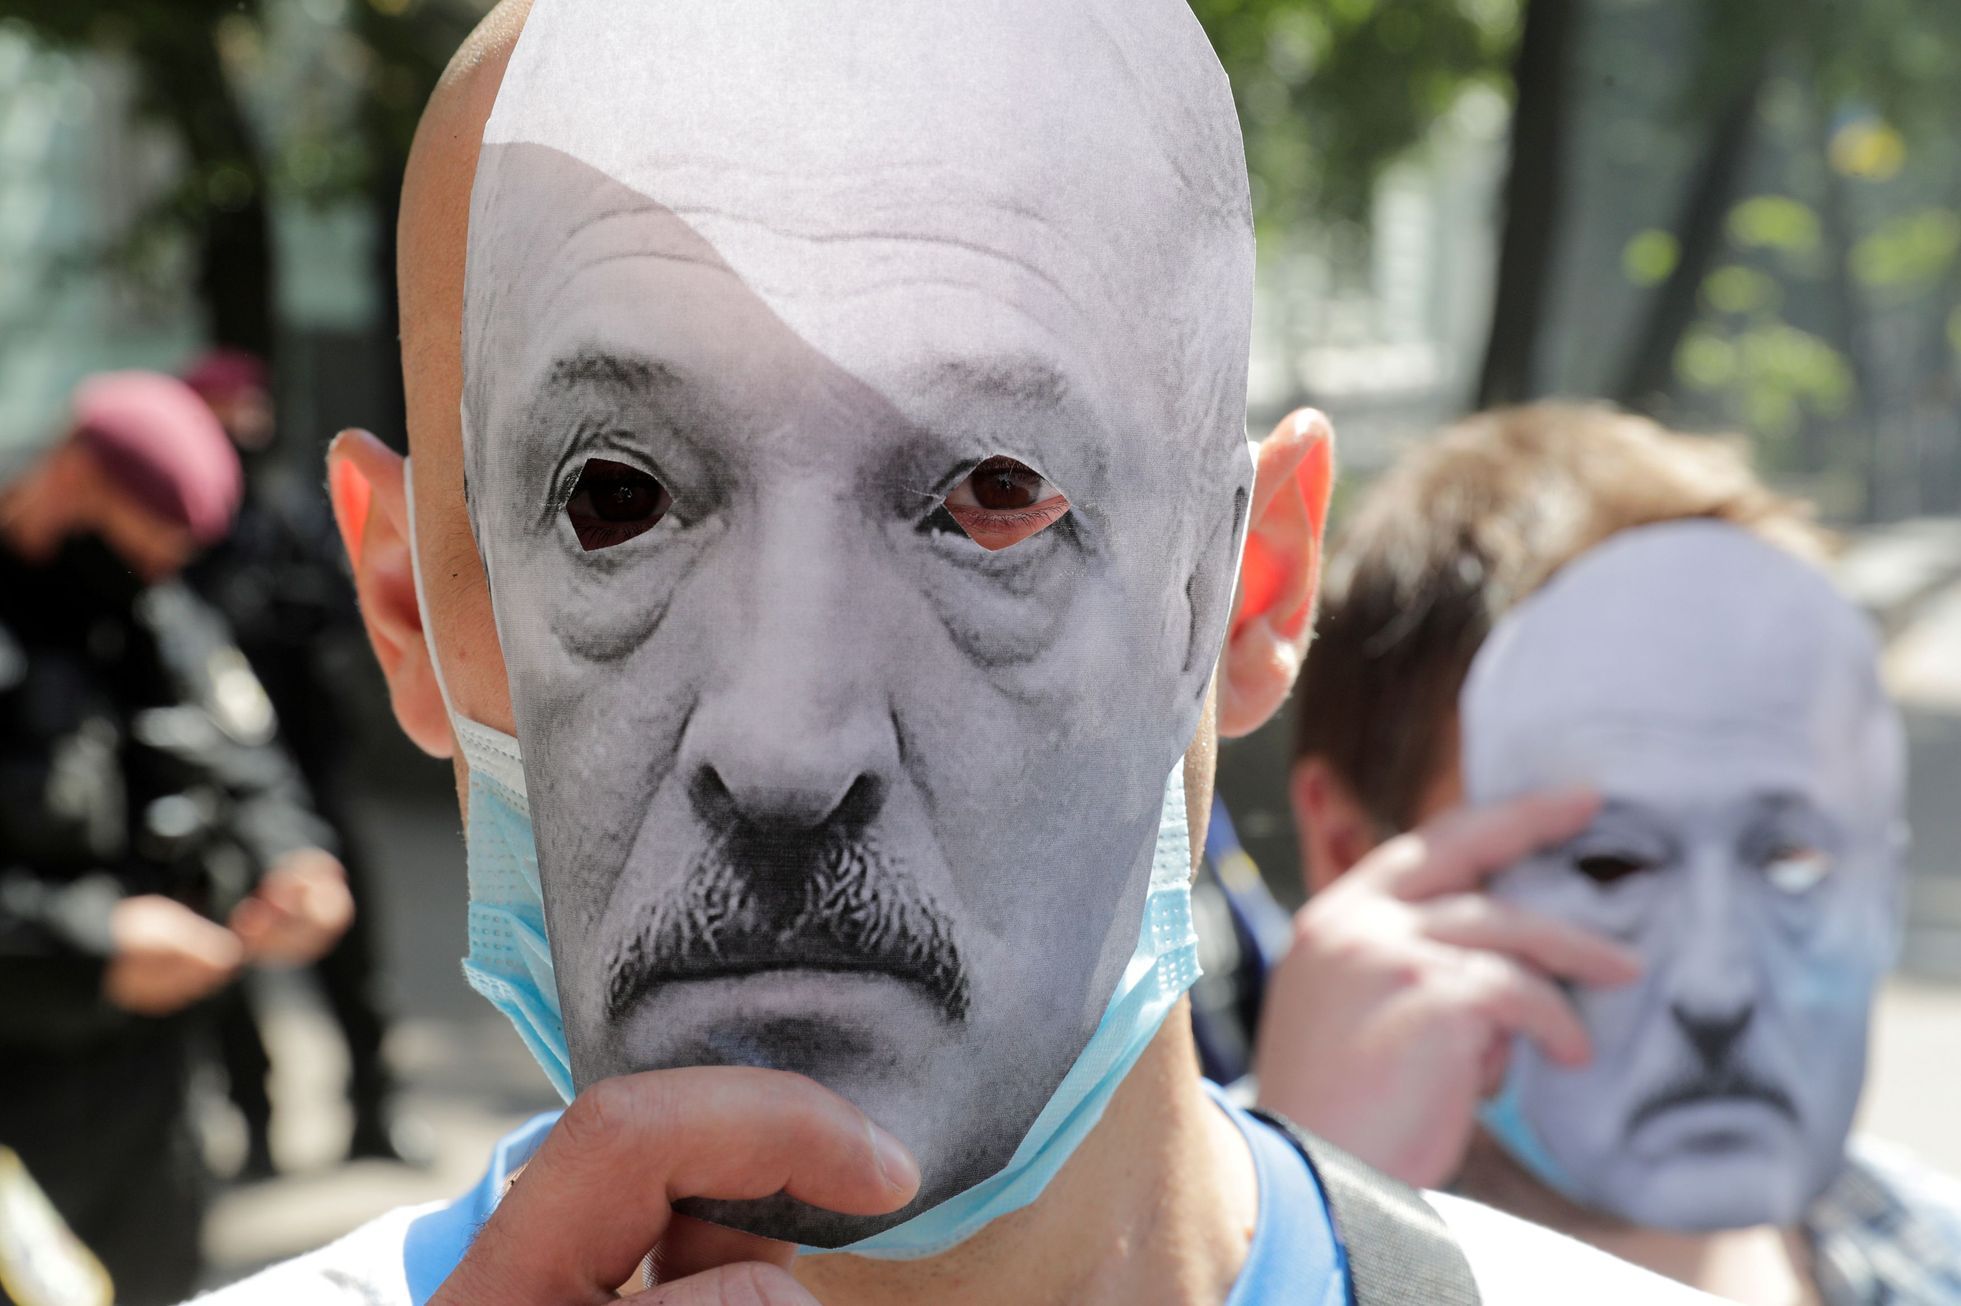 Protest Bělorusko demonstrace Alexandr Lukašenko